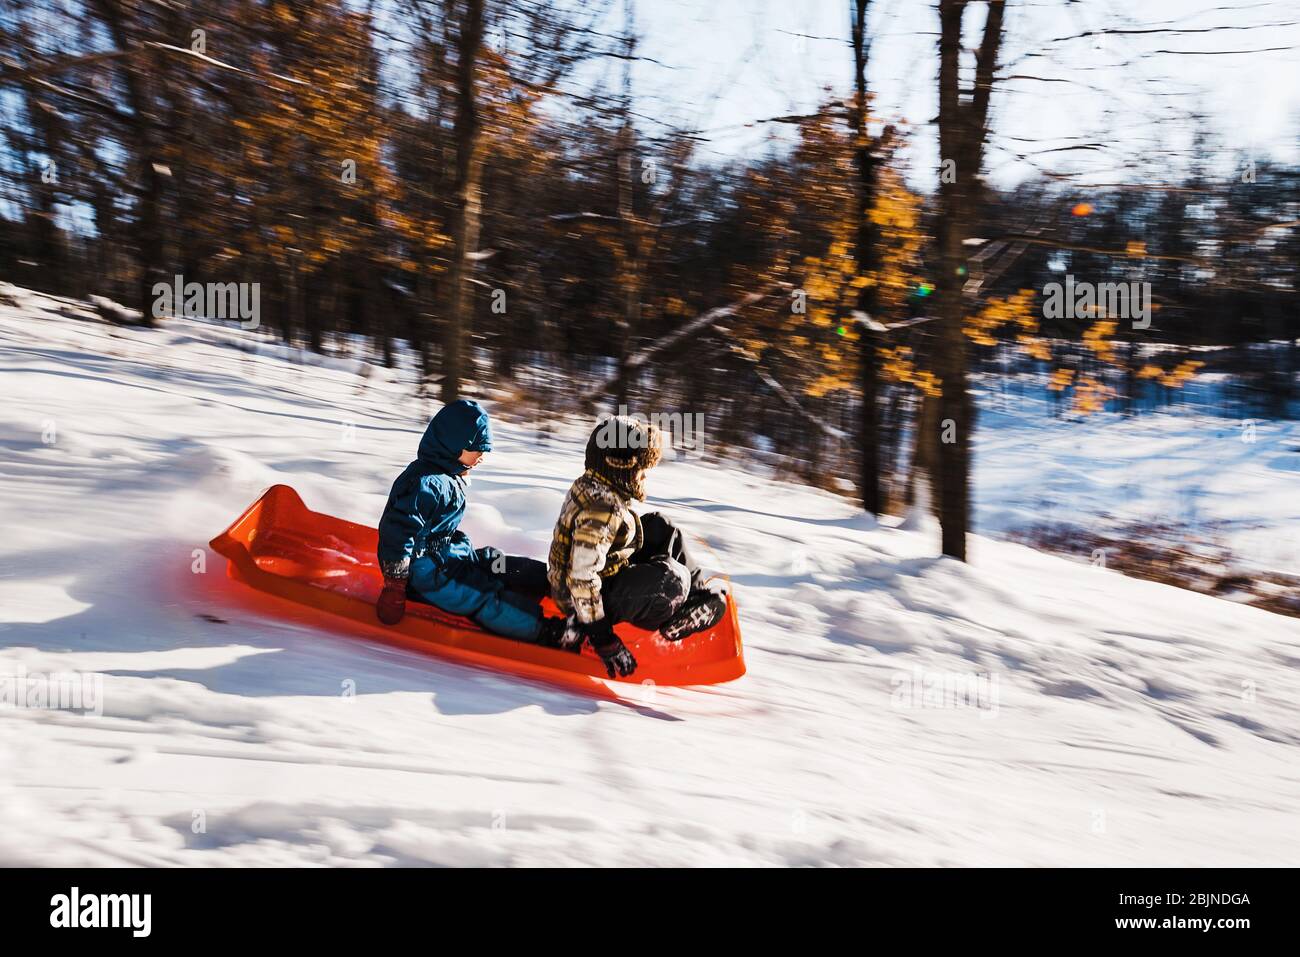 Two boys sledding down a hill, USA Stock Photo